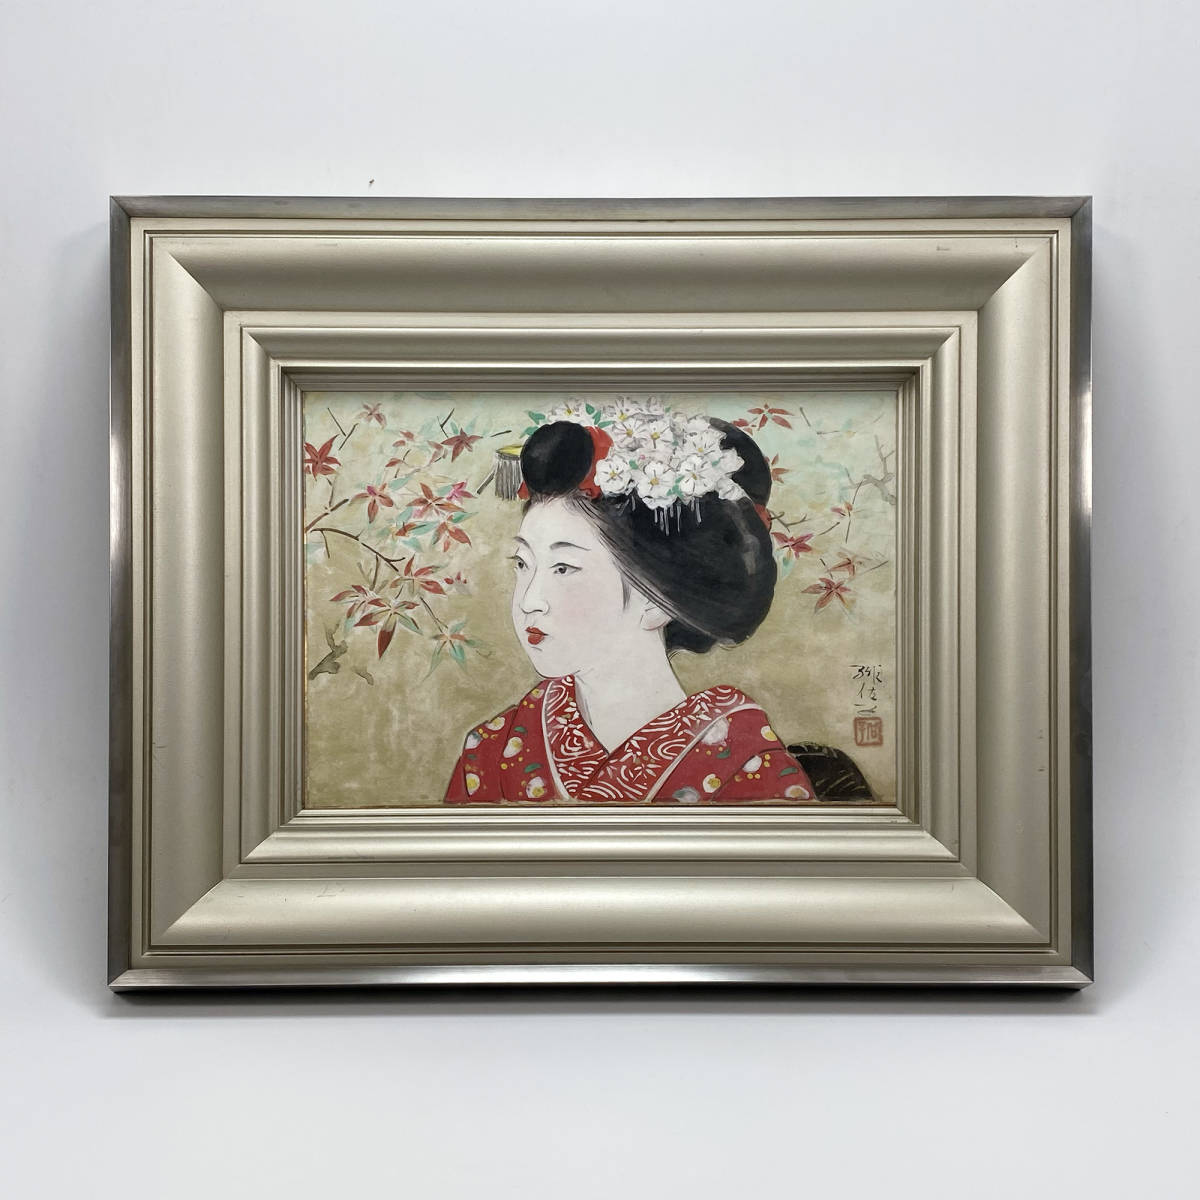 [Authentisch] ■ Kajiwara Hisako ■ Herbst im Herbst Japanische Malerei/mit Aufkleber/gerahmtes farbiges Papier 240216001, Malerei, Japanische Malerei, Andere